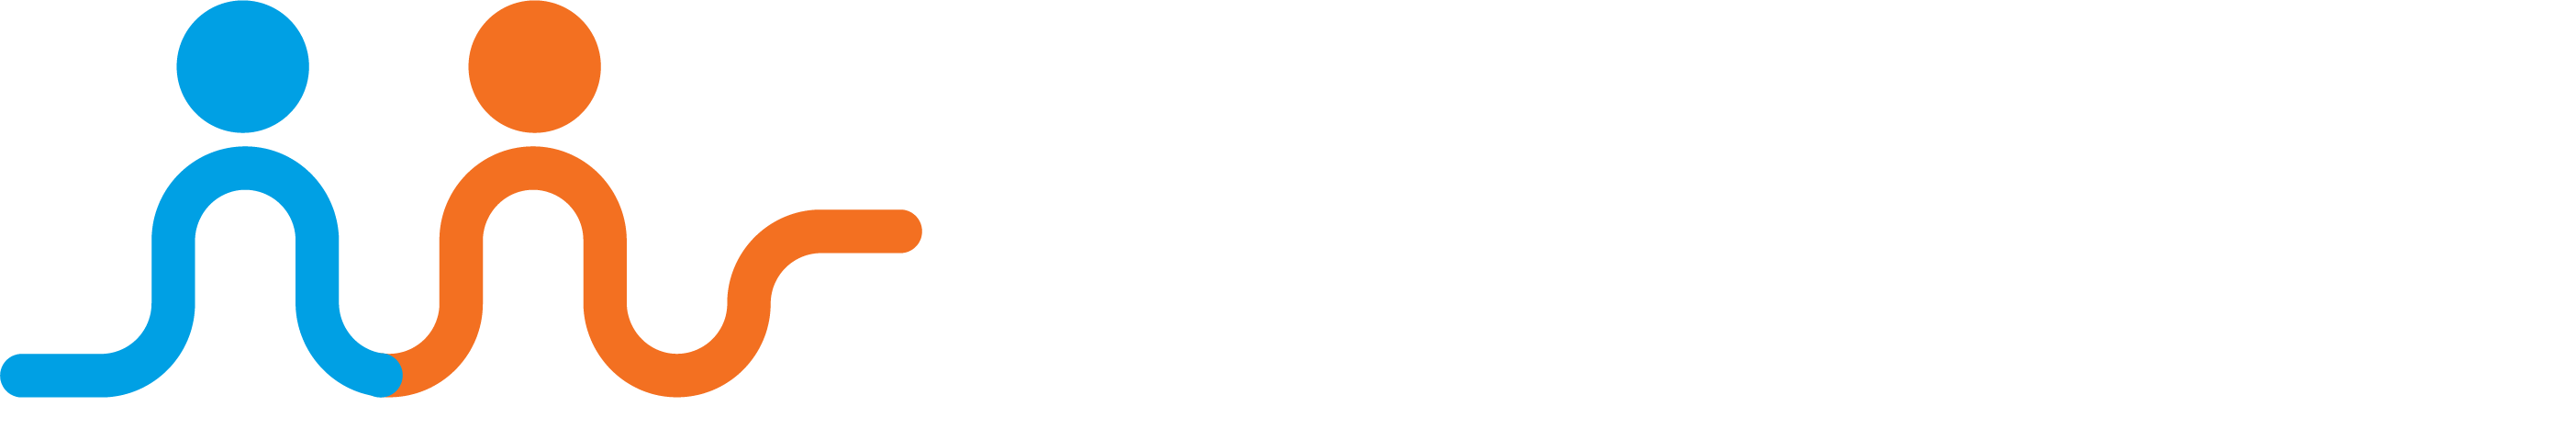 EI Technical and Innovation Programme logo